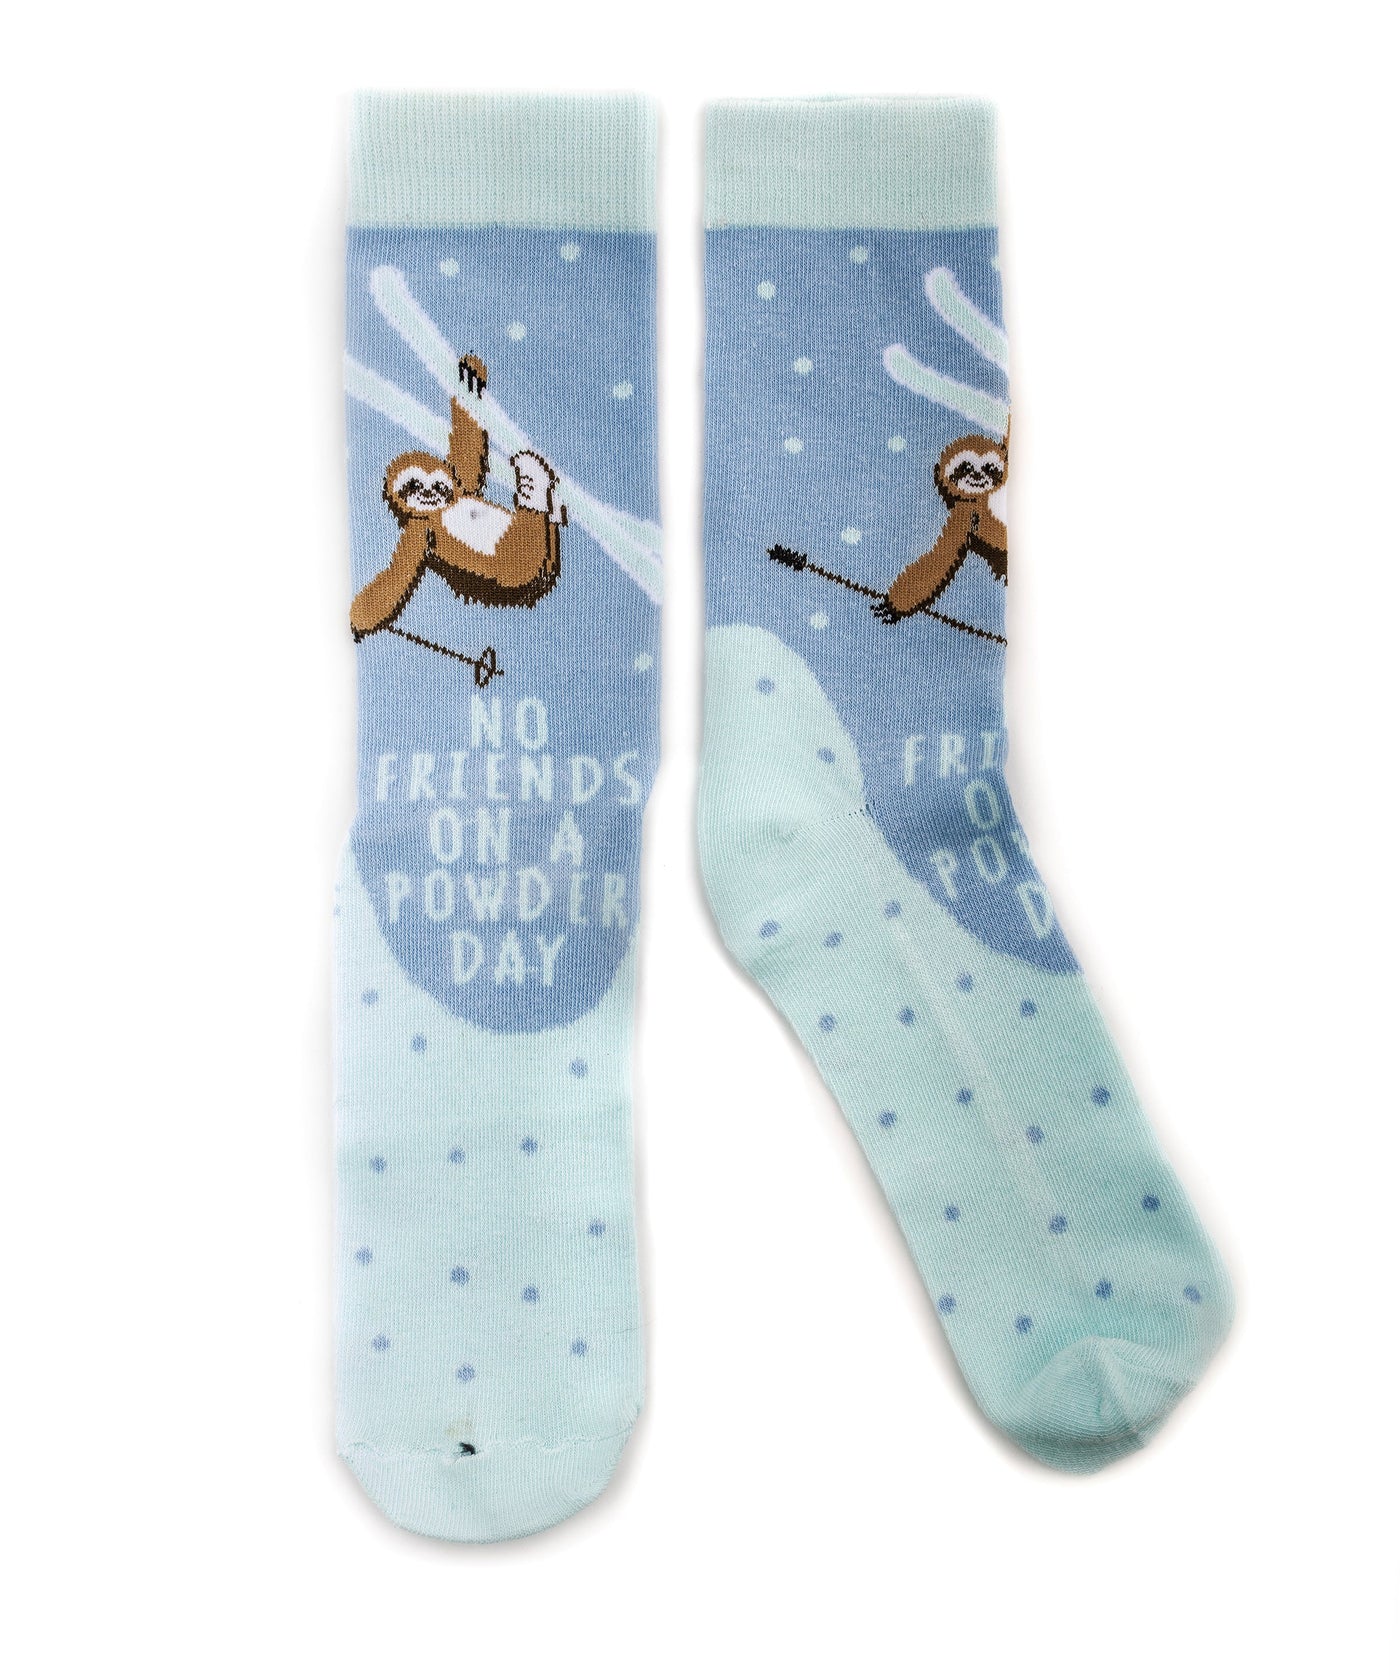 No Sloth Friends On A Powder Day Light Blue Socks